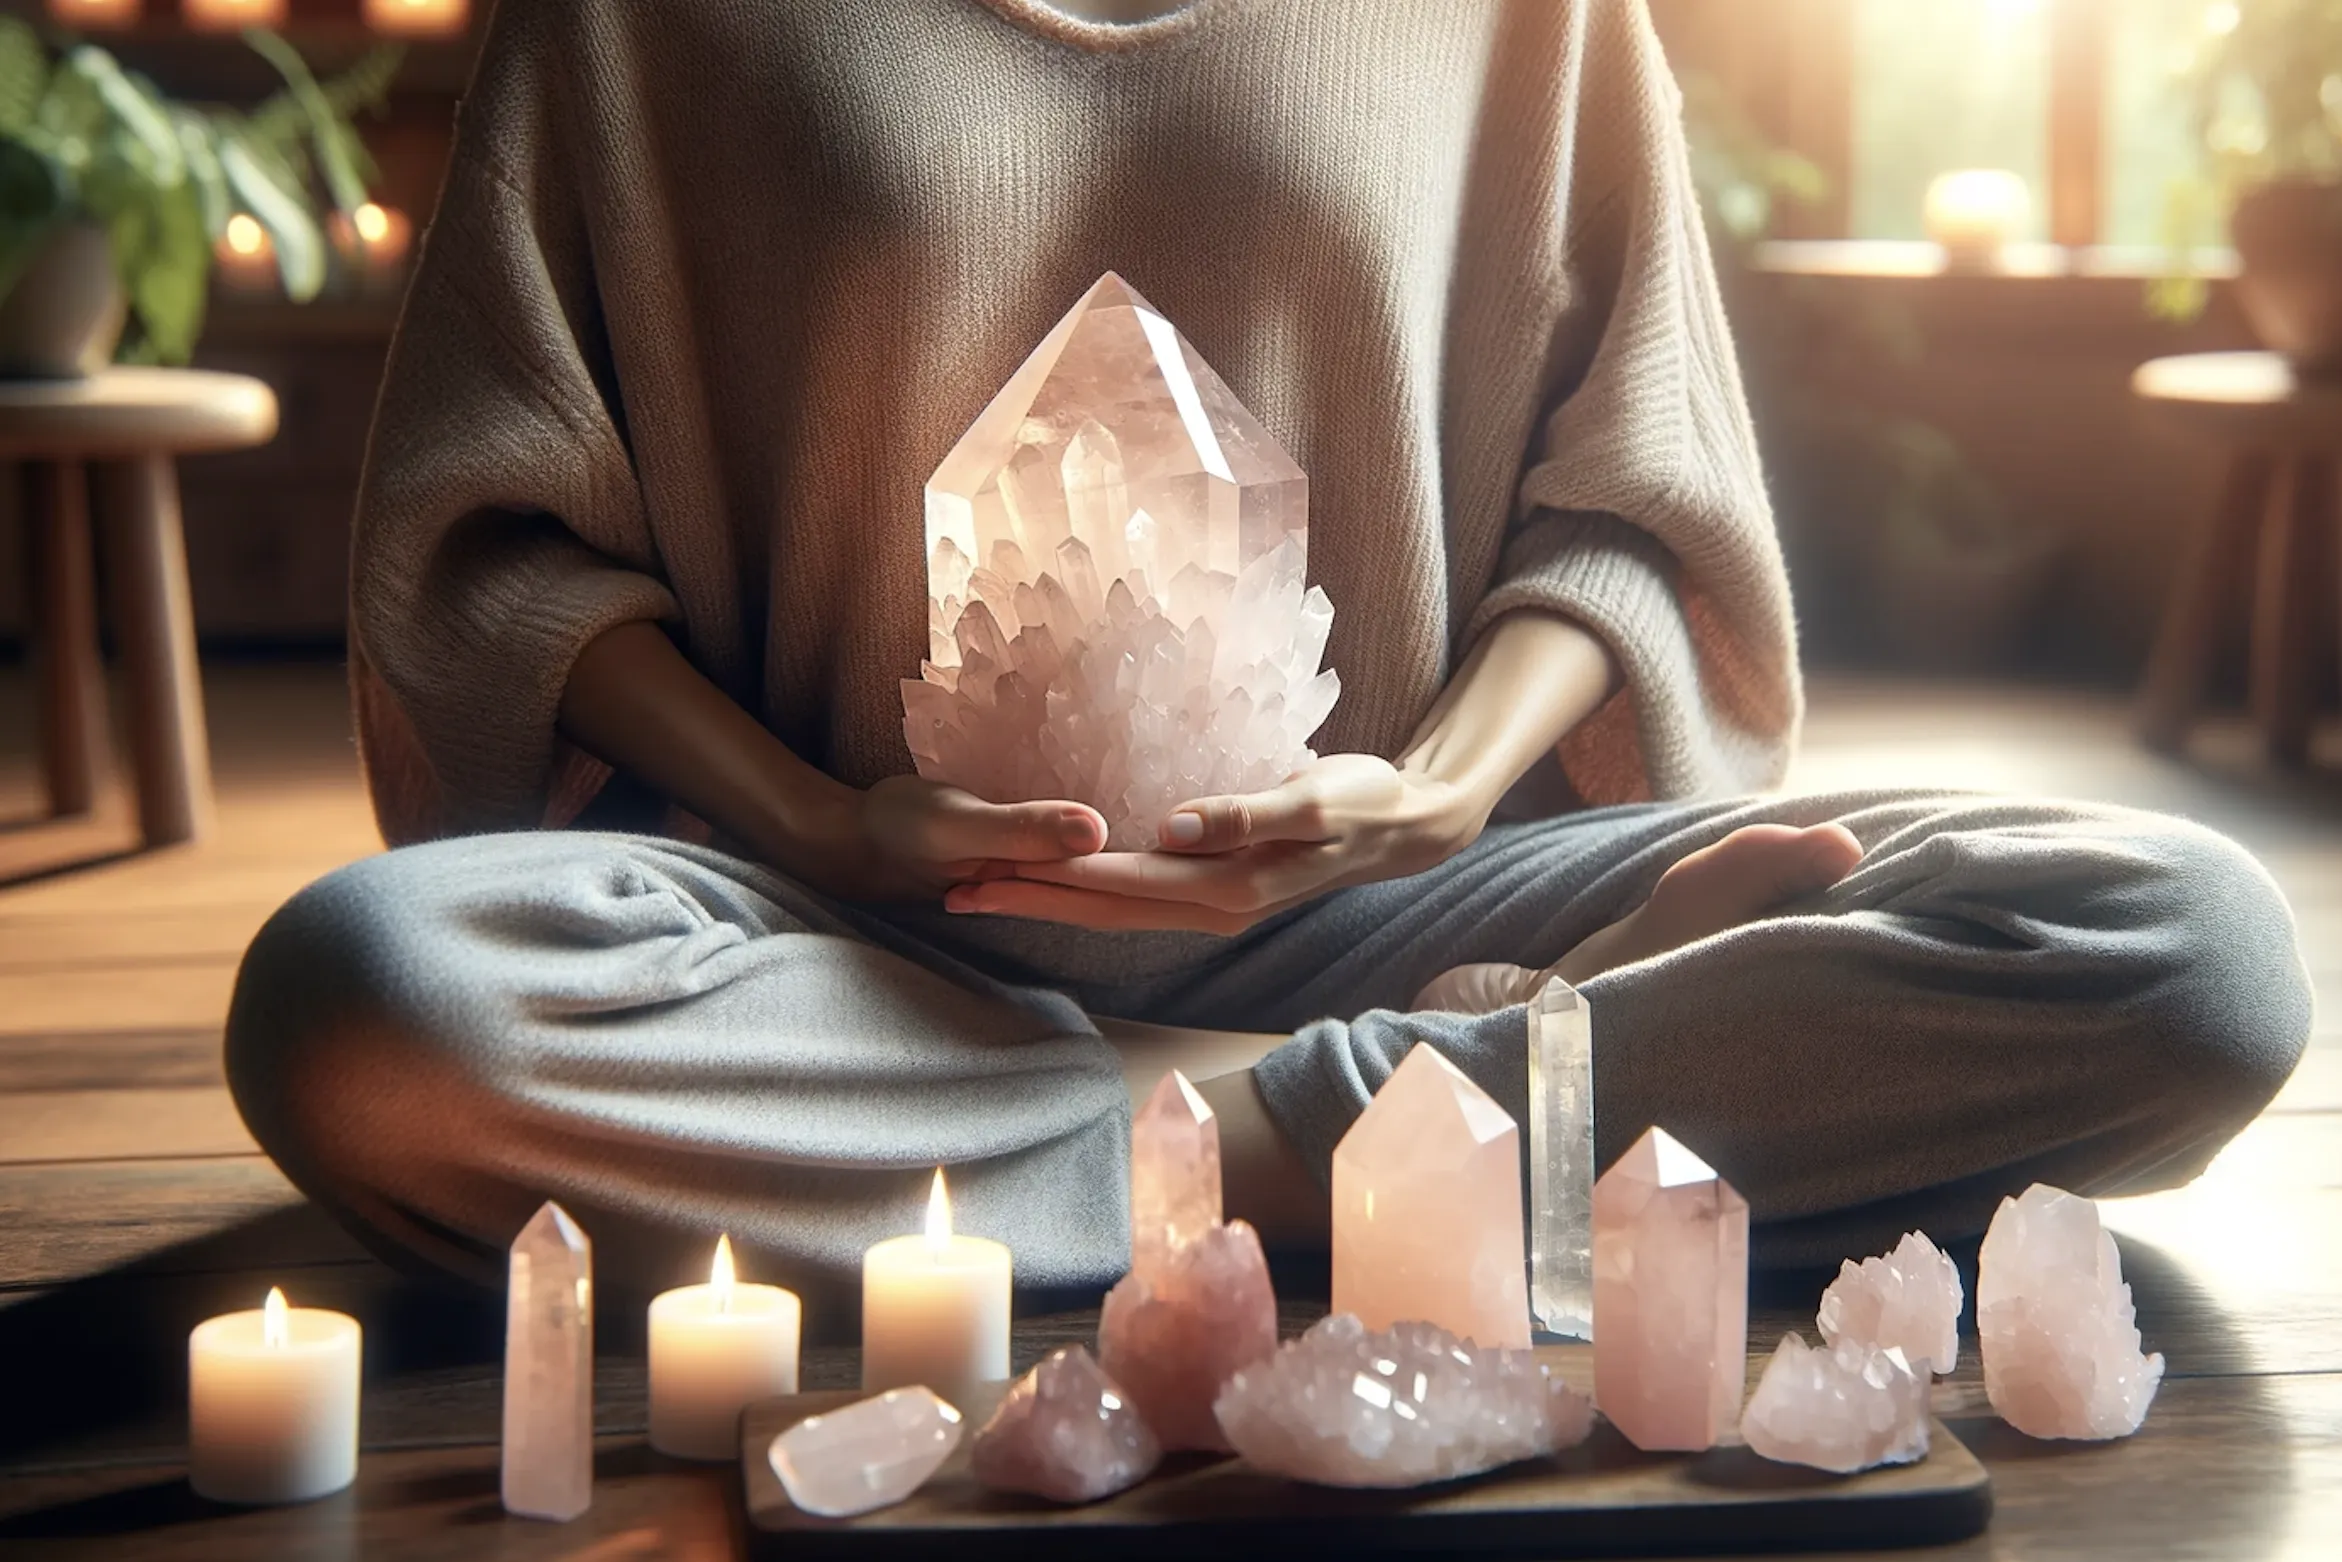 rose quartz crystal being held to aid meditation